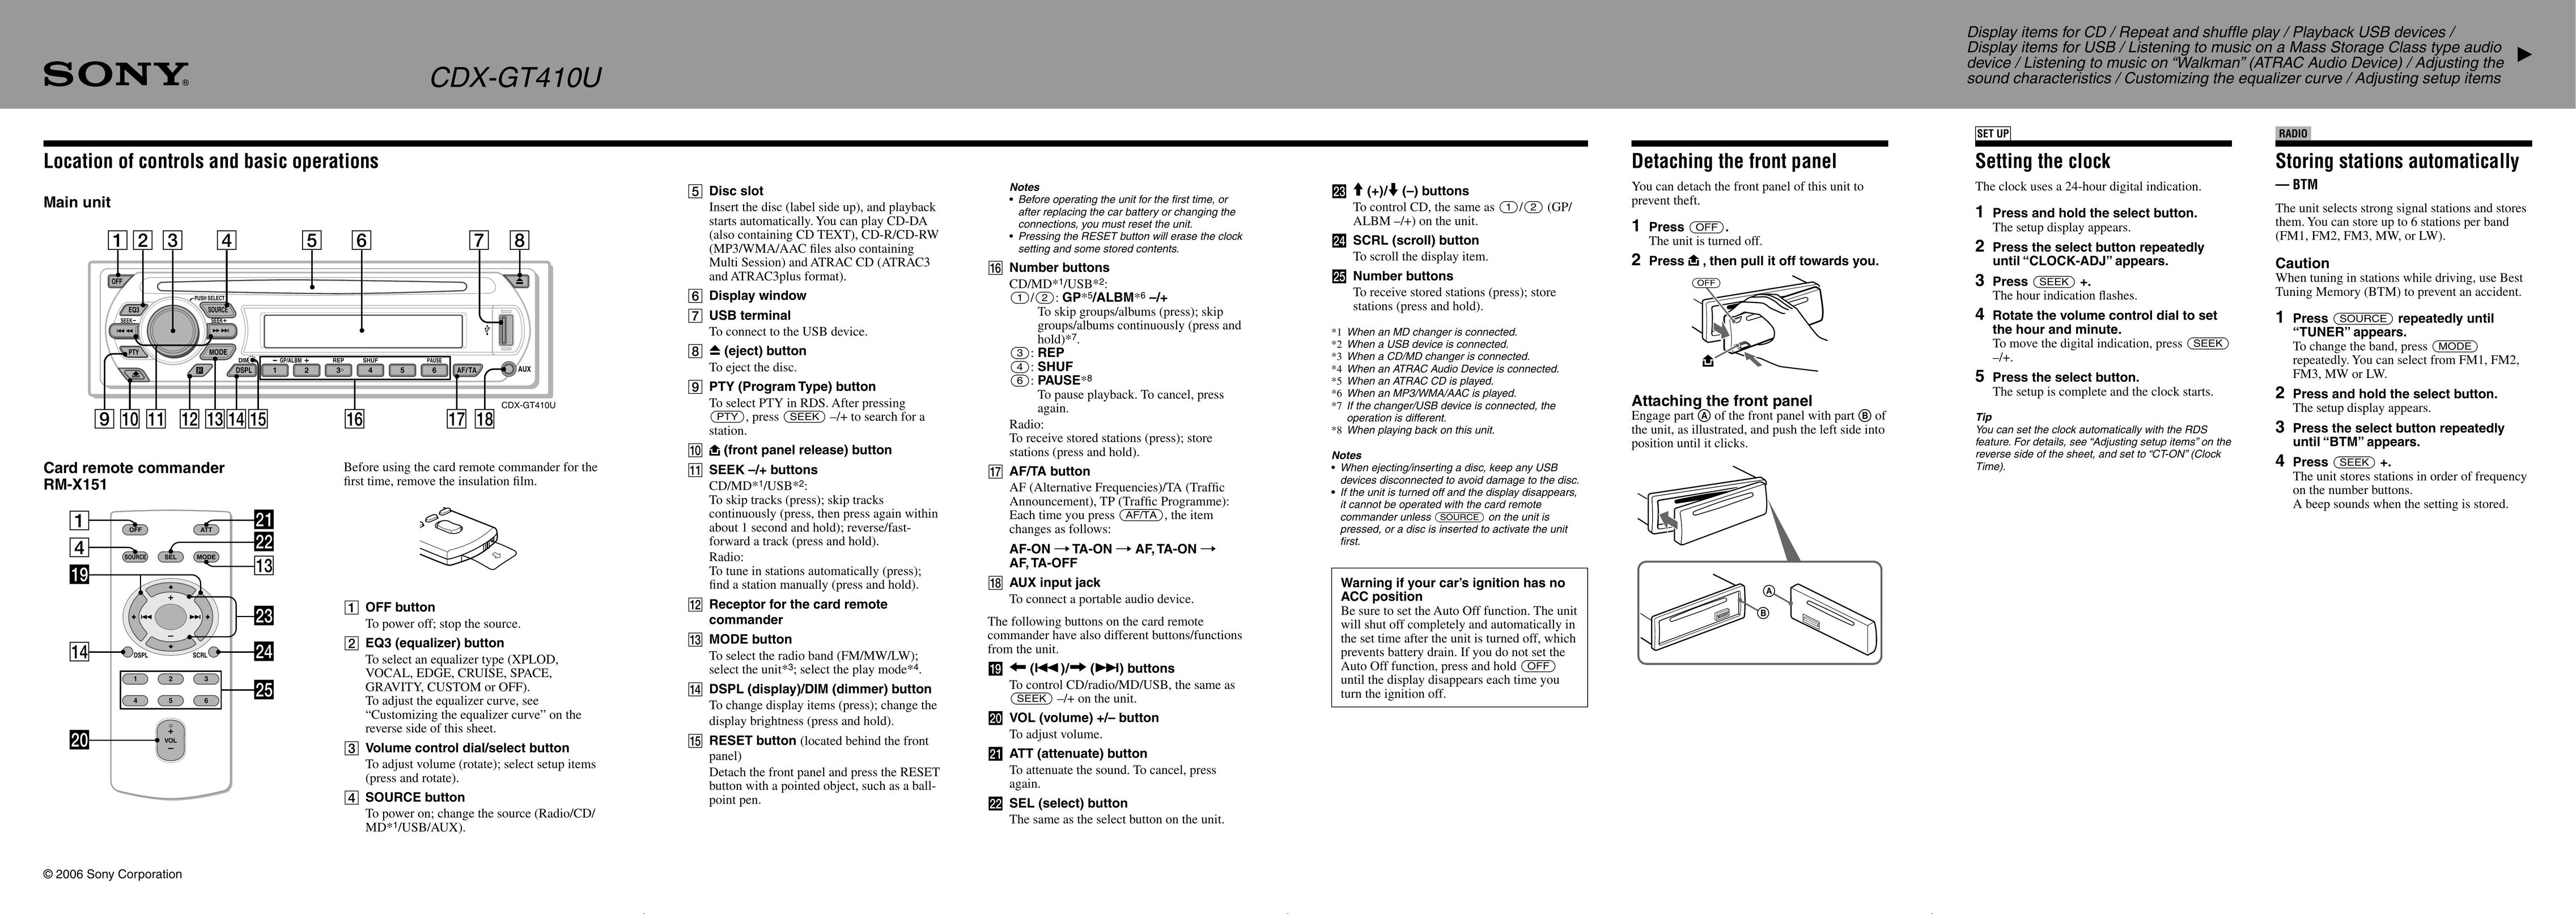 Sony CDX-GT410U Range User Manual